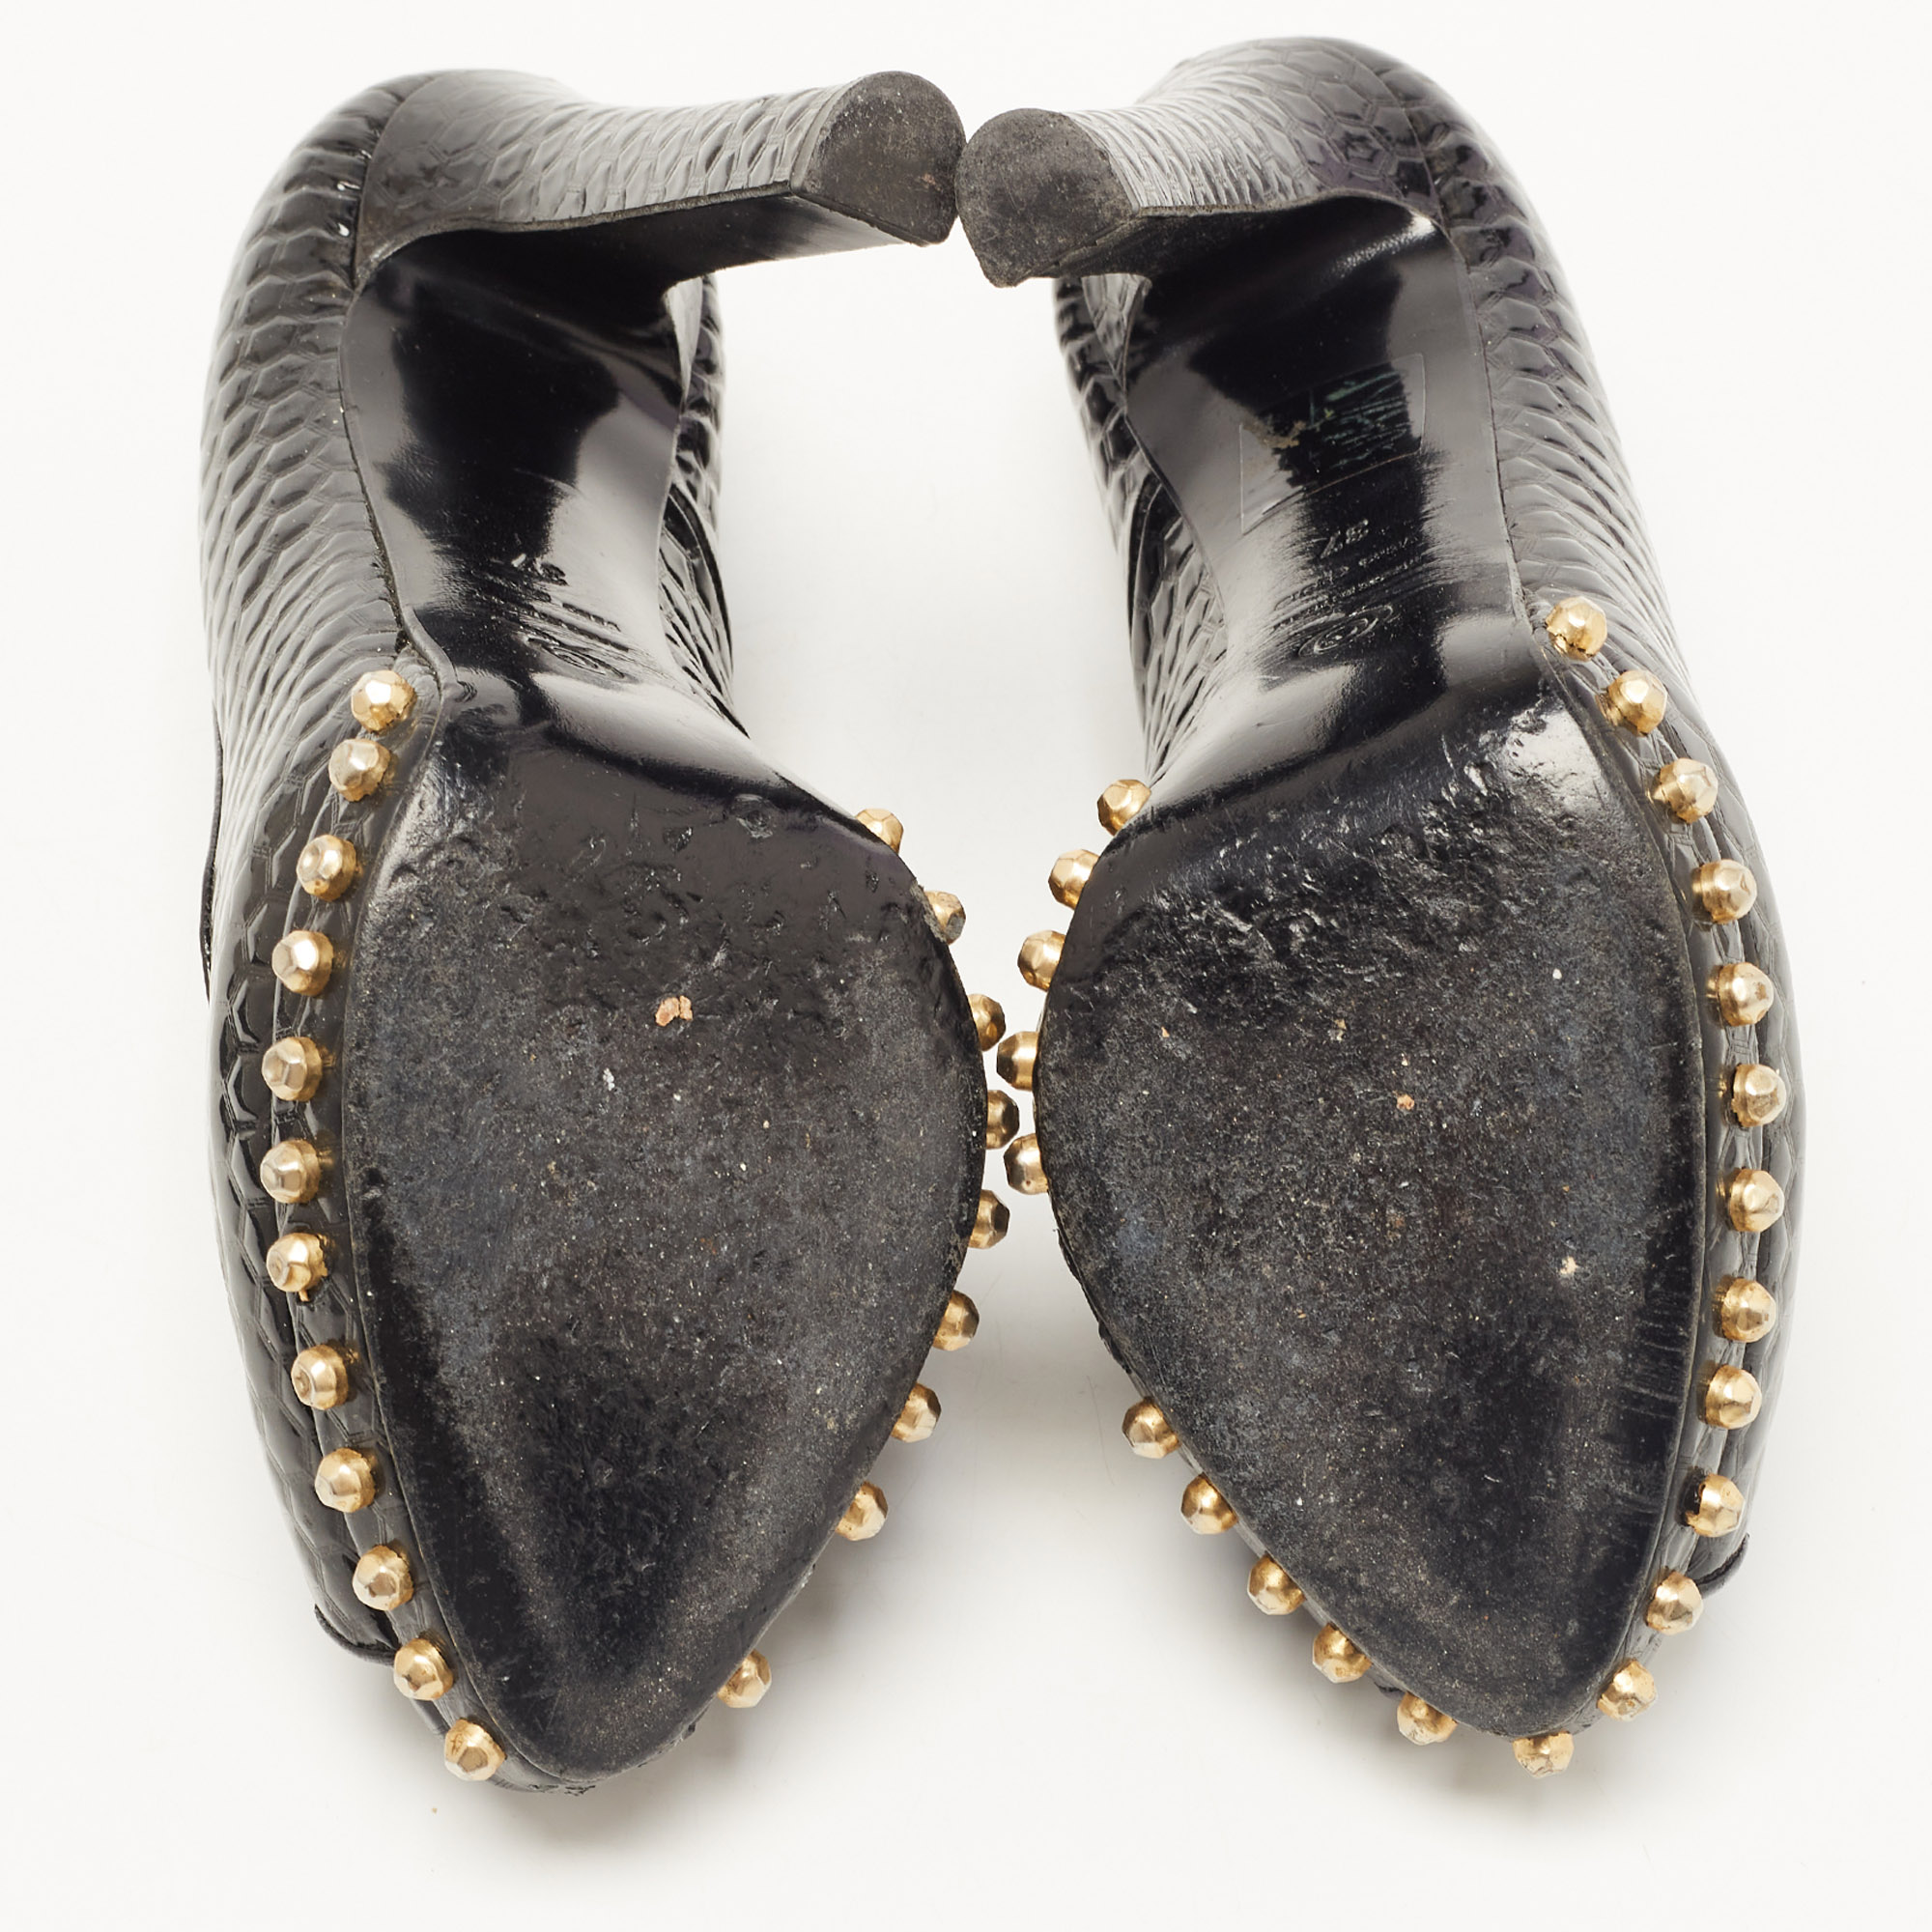 Alexander McQueen Black Patent Leather Skull Embellished Peep Toe Pumps Size 37